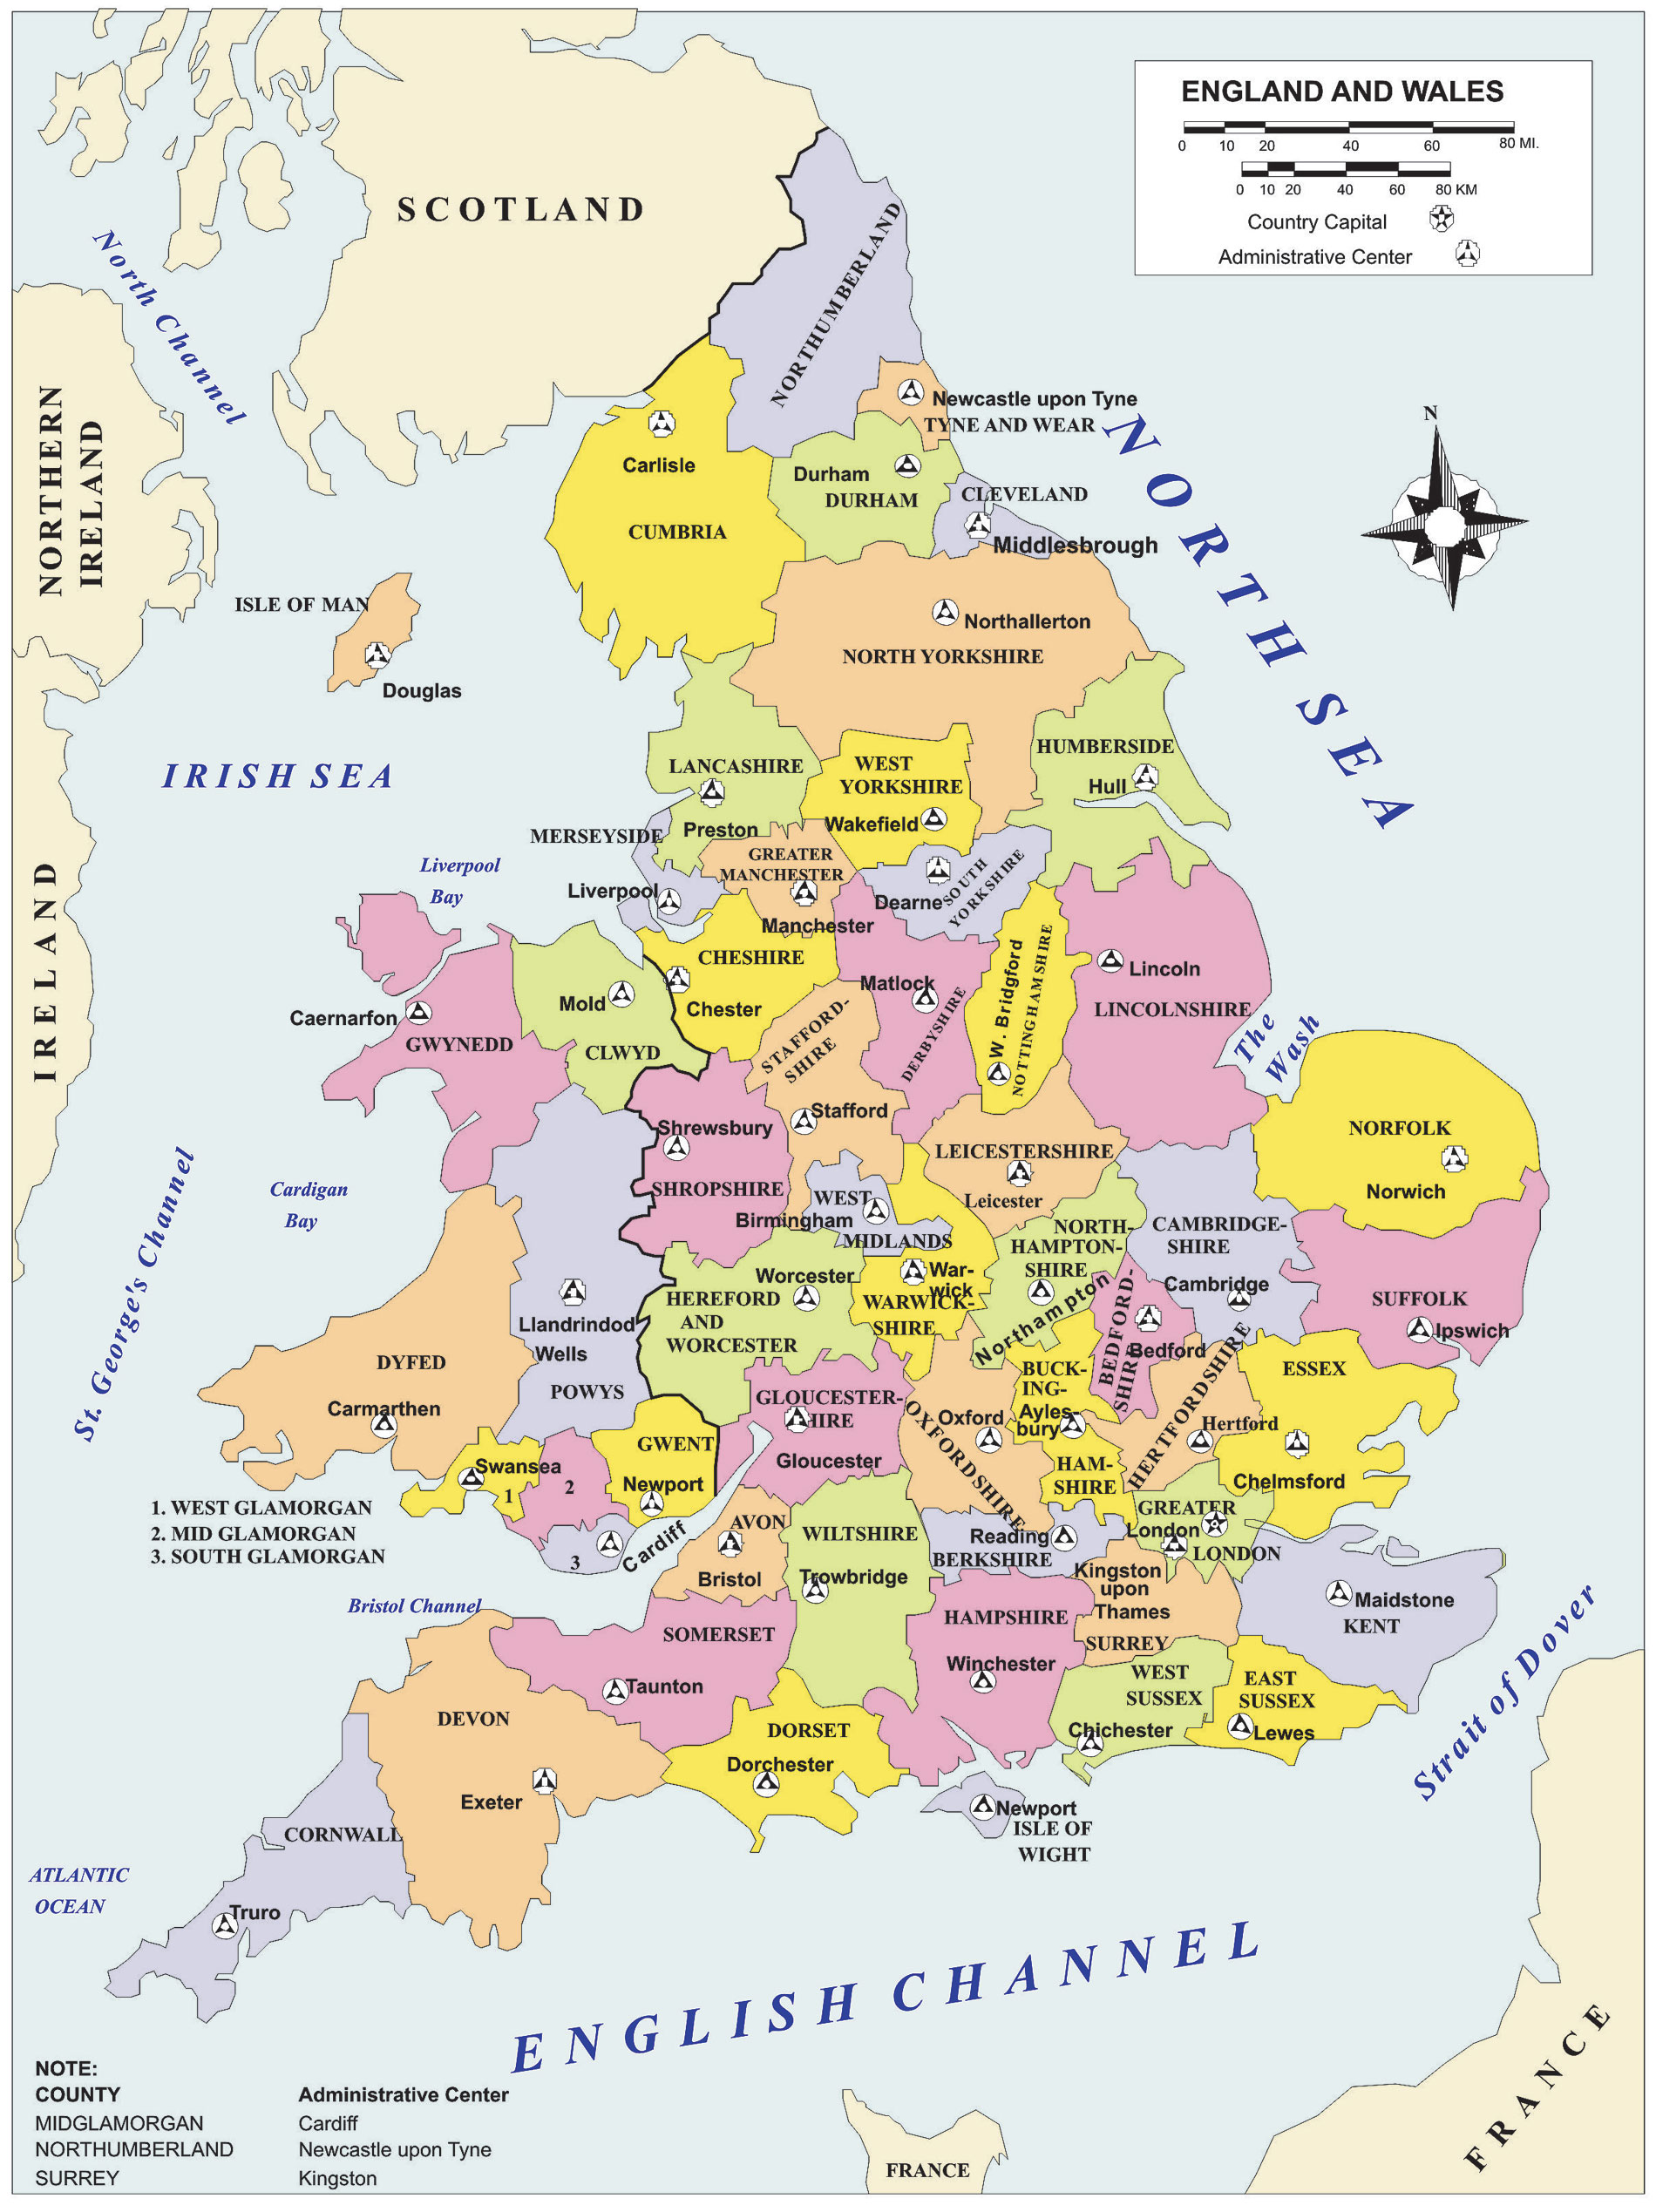 Map United Kingdom or UK